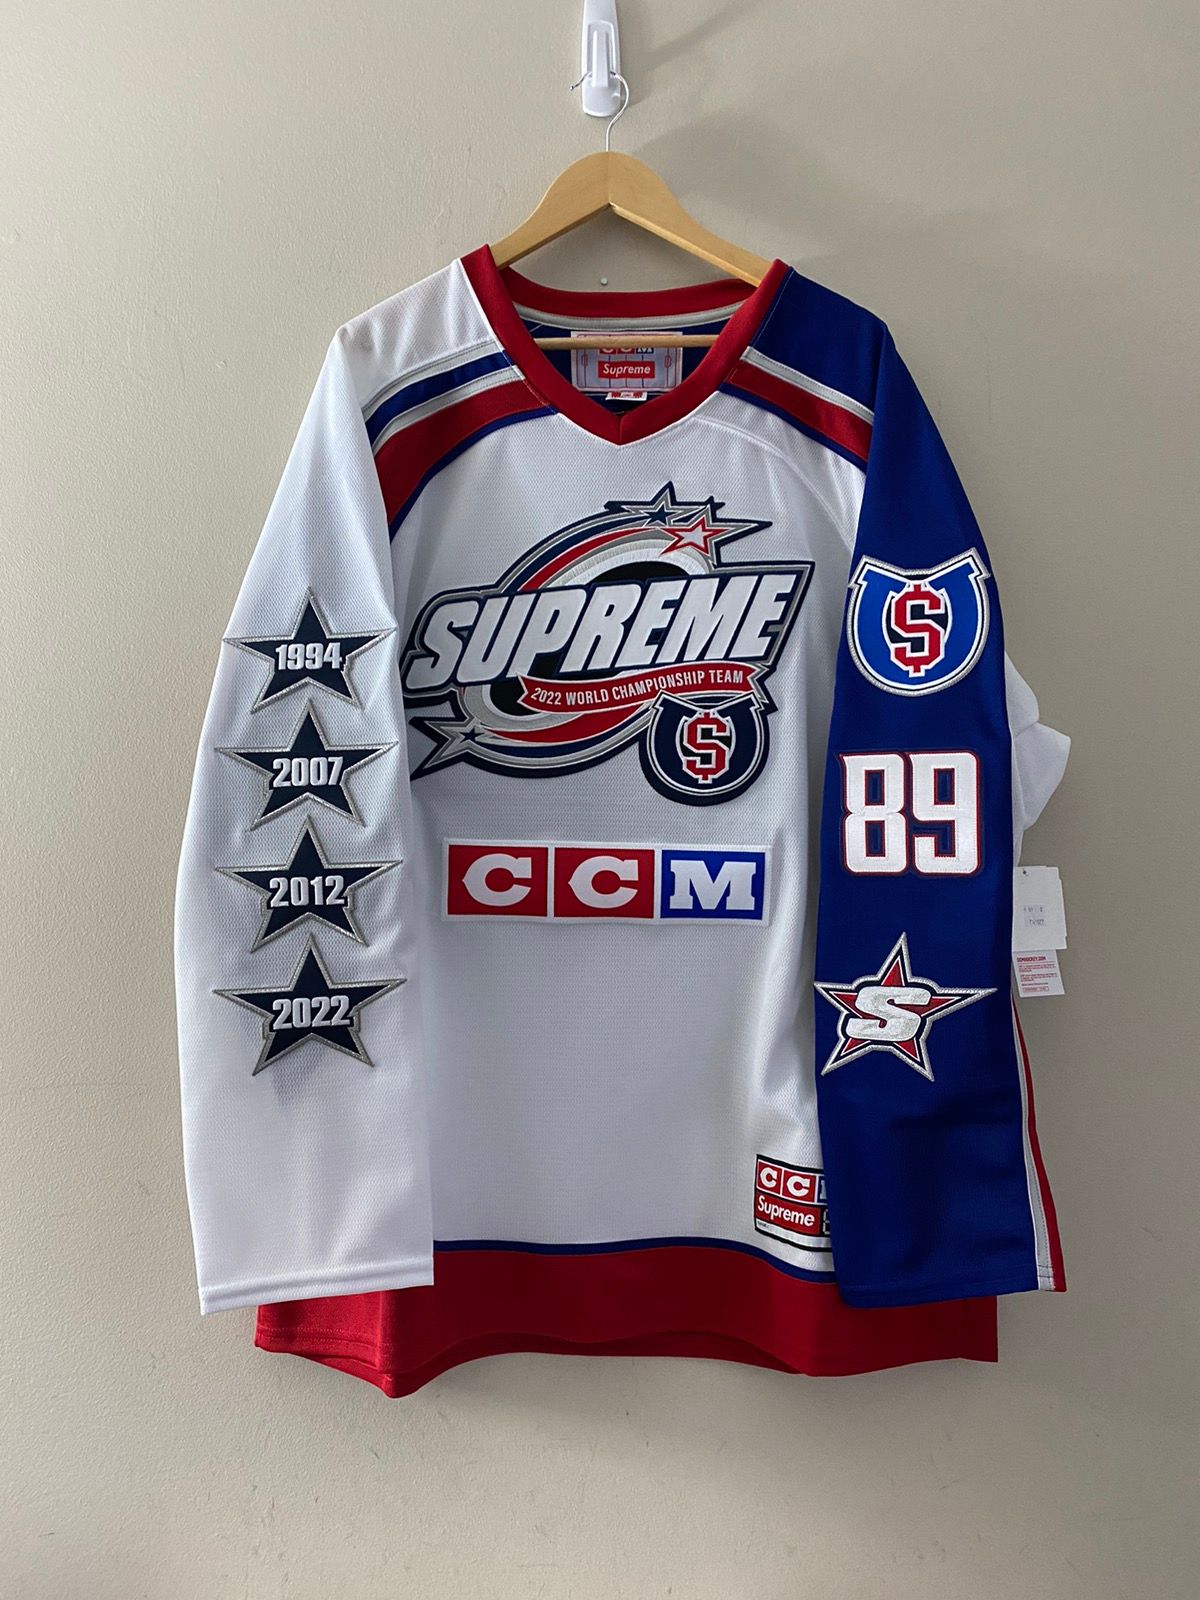 Supreme CCM All Stars Hockey Jersey T-Shirt - Black